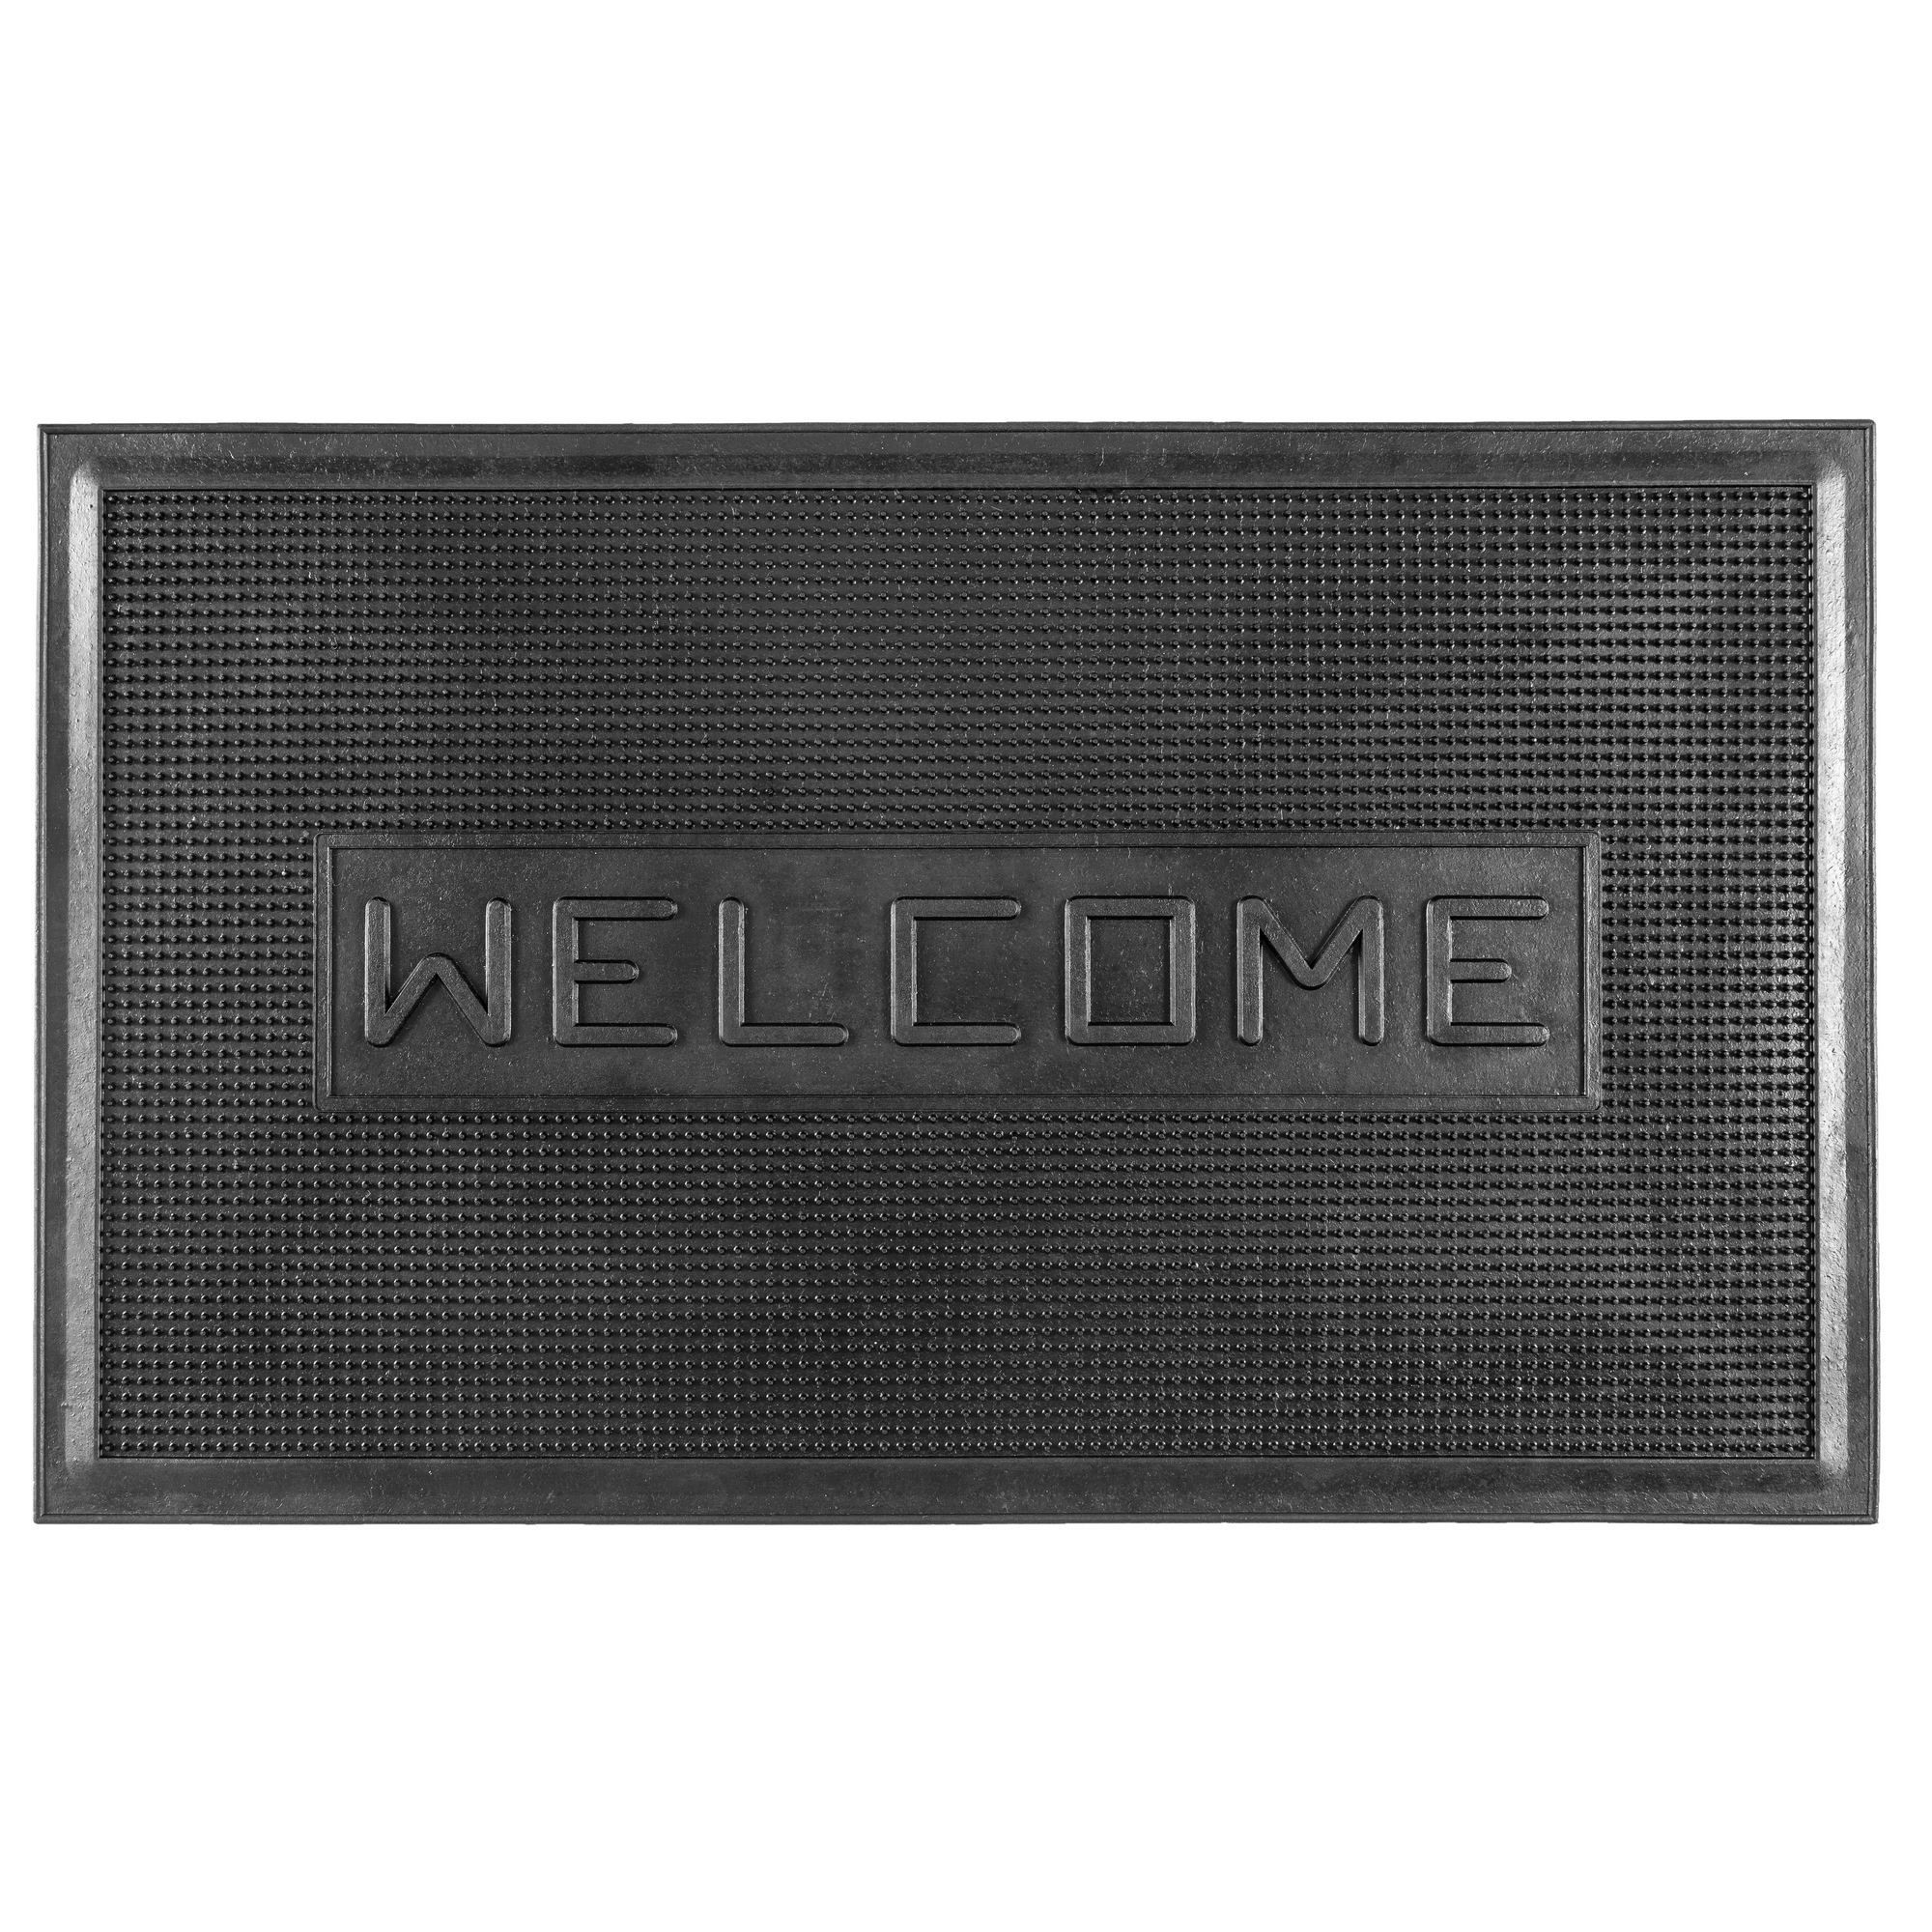 Fußmatten-Set 'Welcome' 45 x 75 cm schwarz 10-teilig + product picture